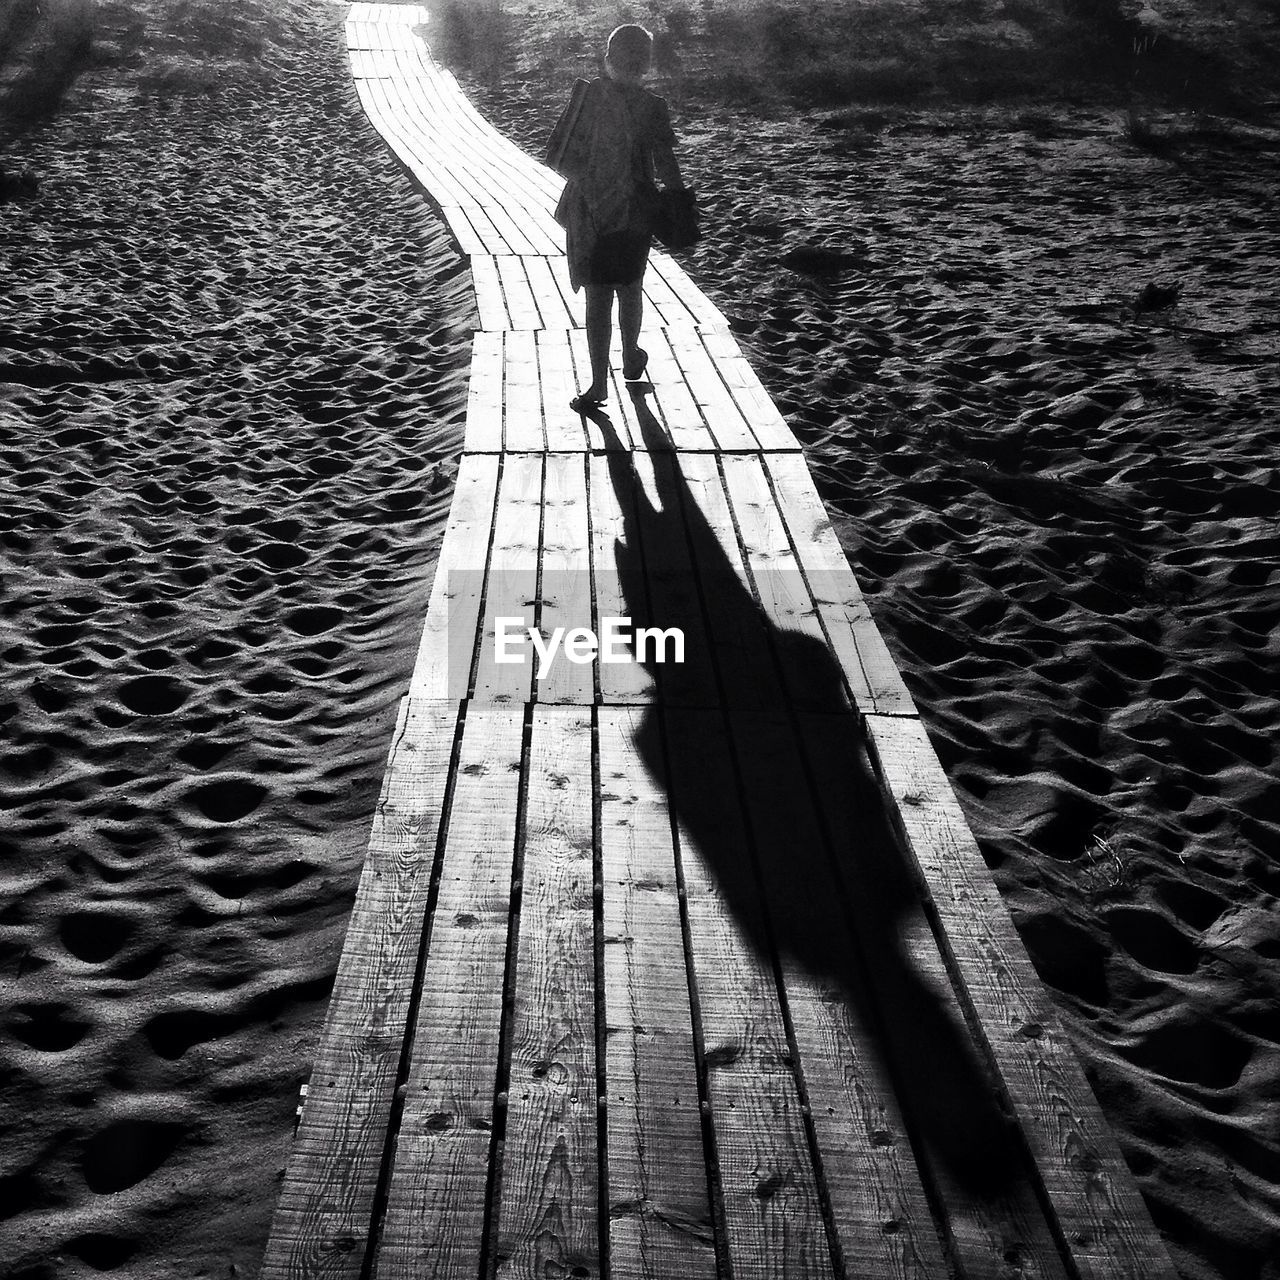 Beach scene. young boy casting shadow on wood walkway 